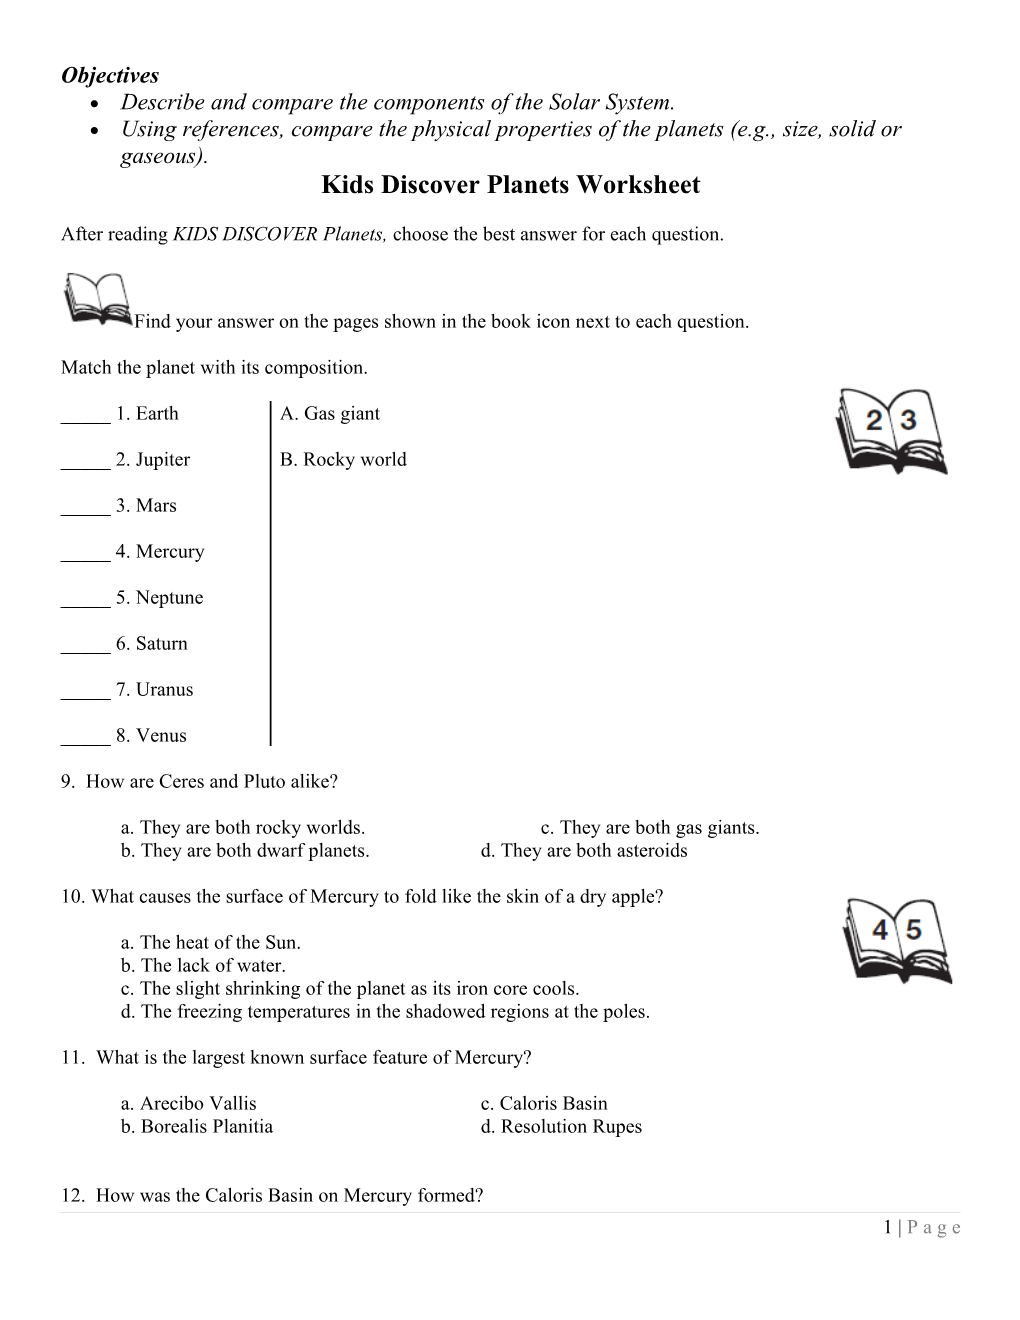 Kids Discover Planets Worksheet